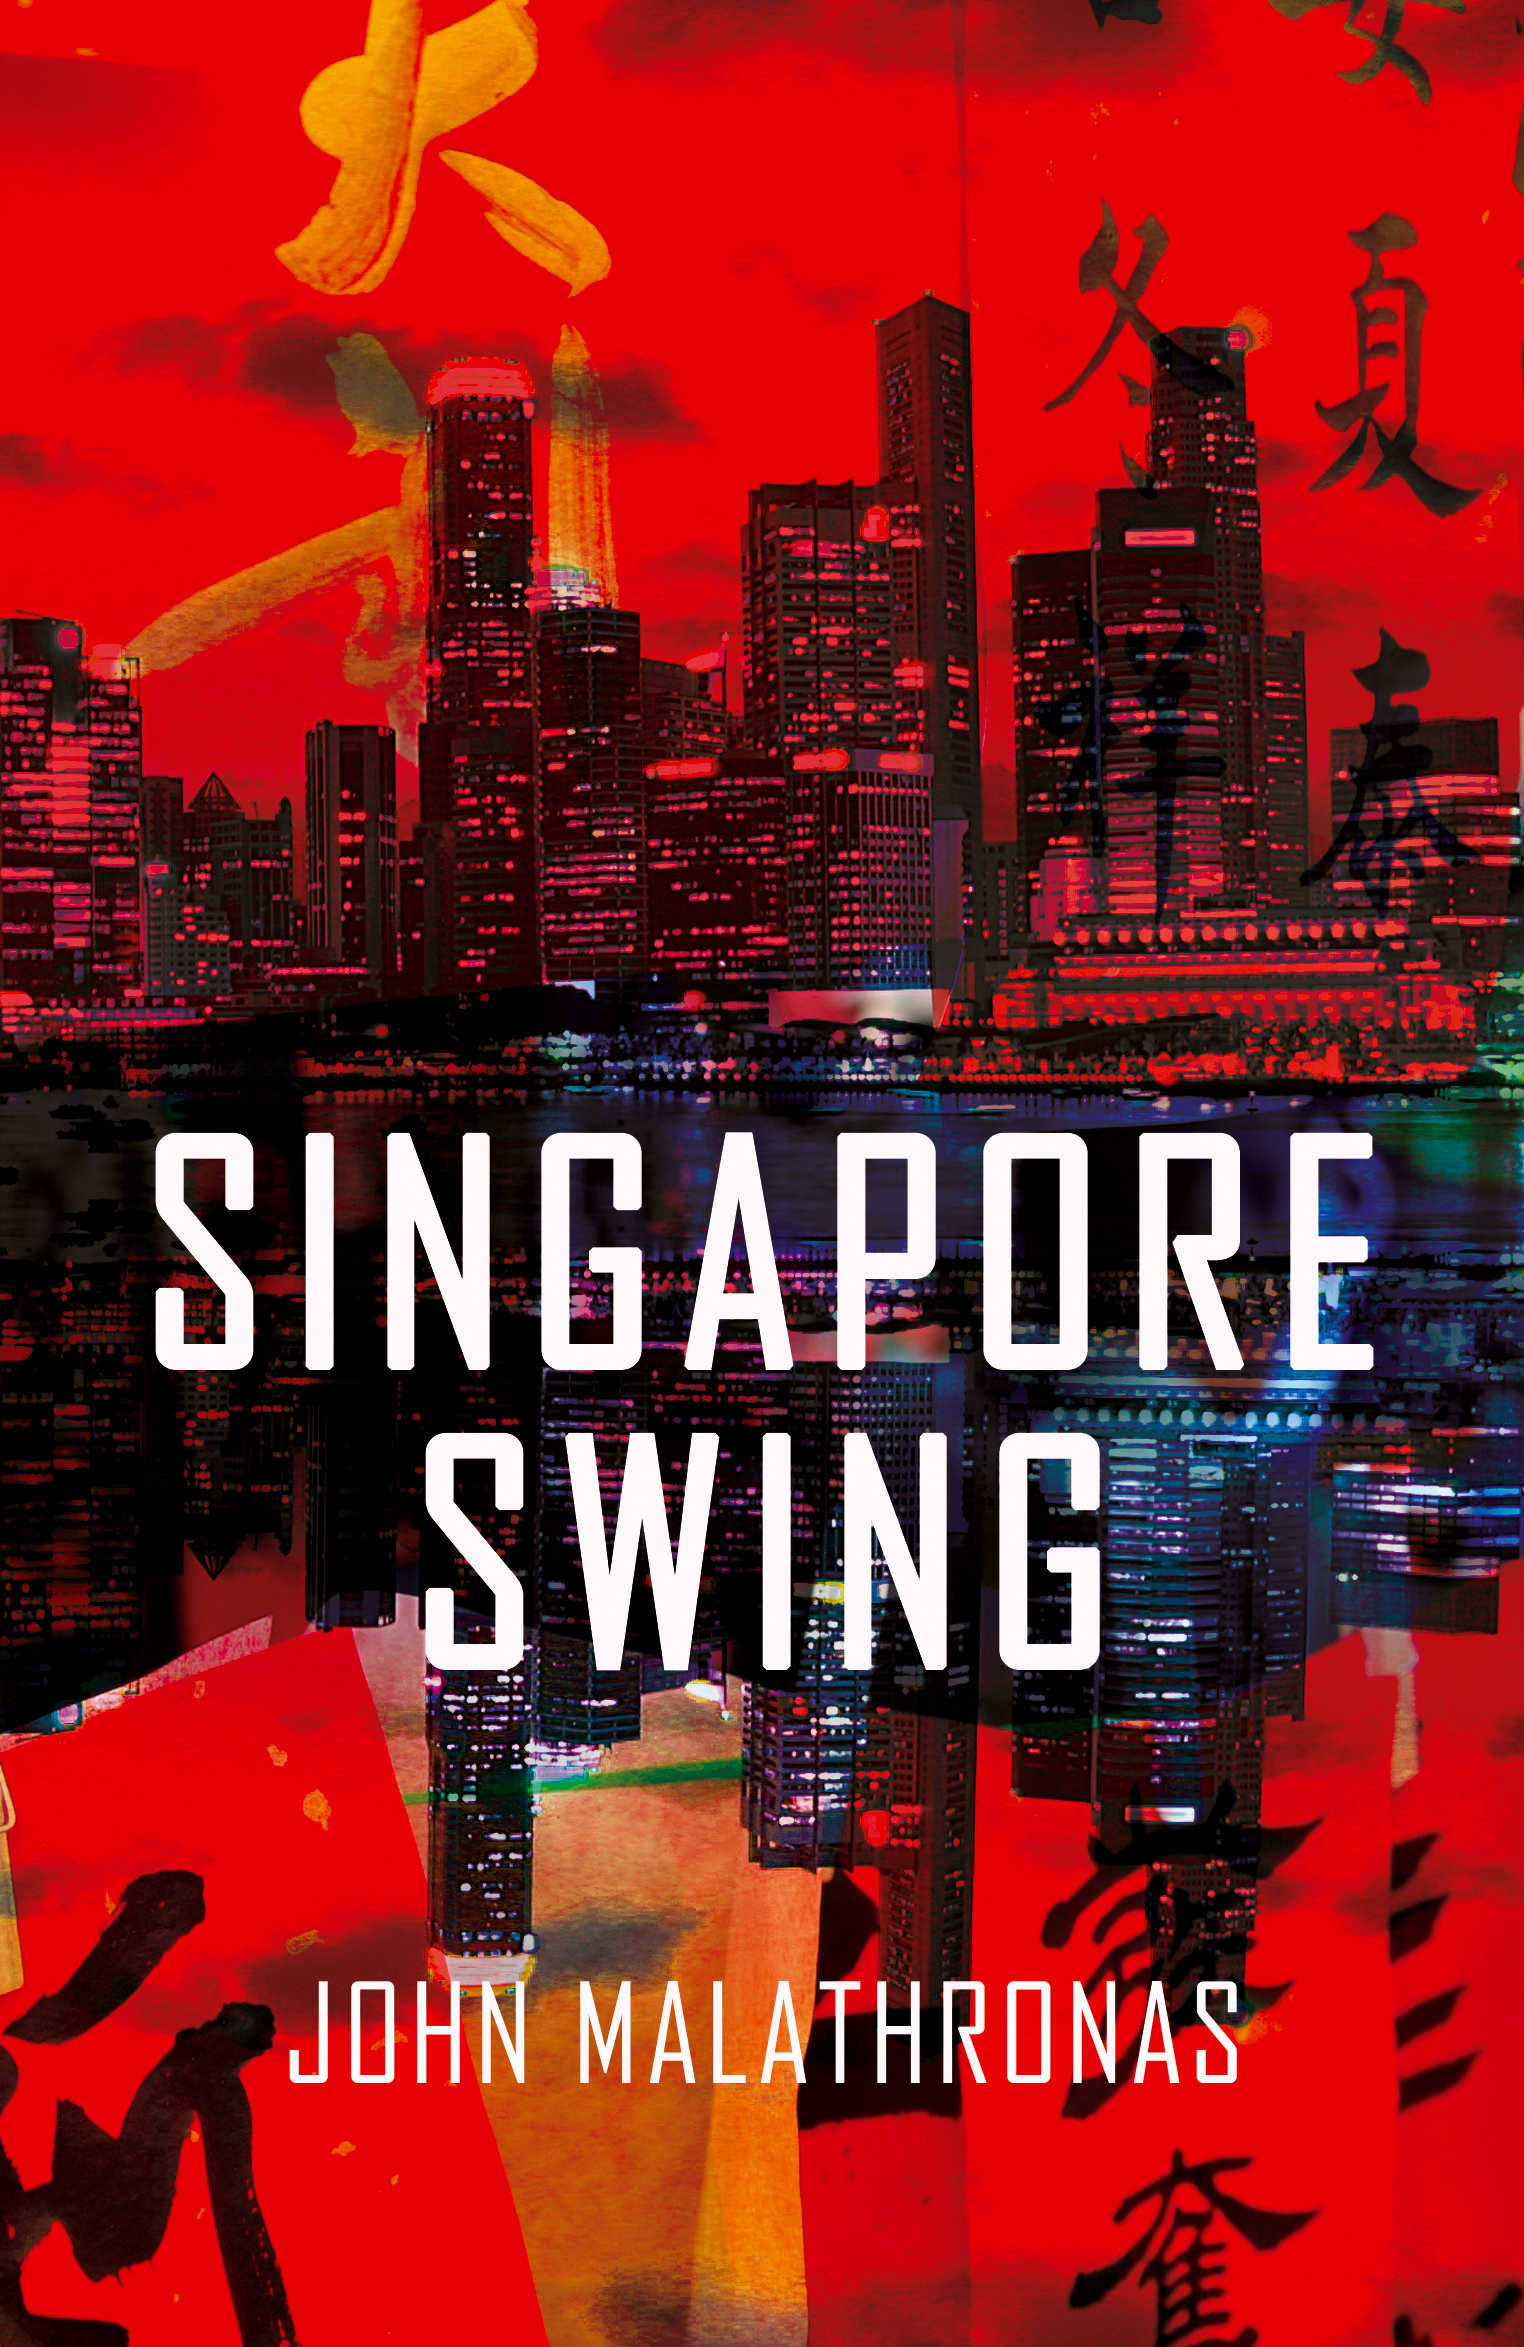 Singapore Swing (2011) by John Malathronas